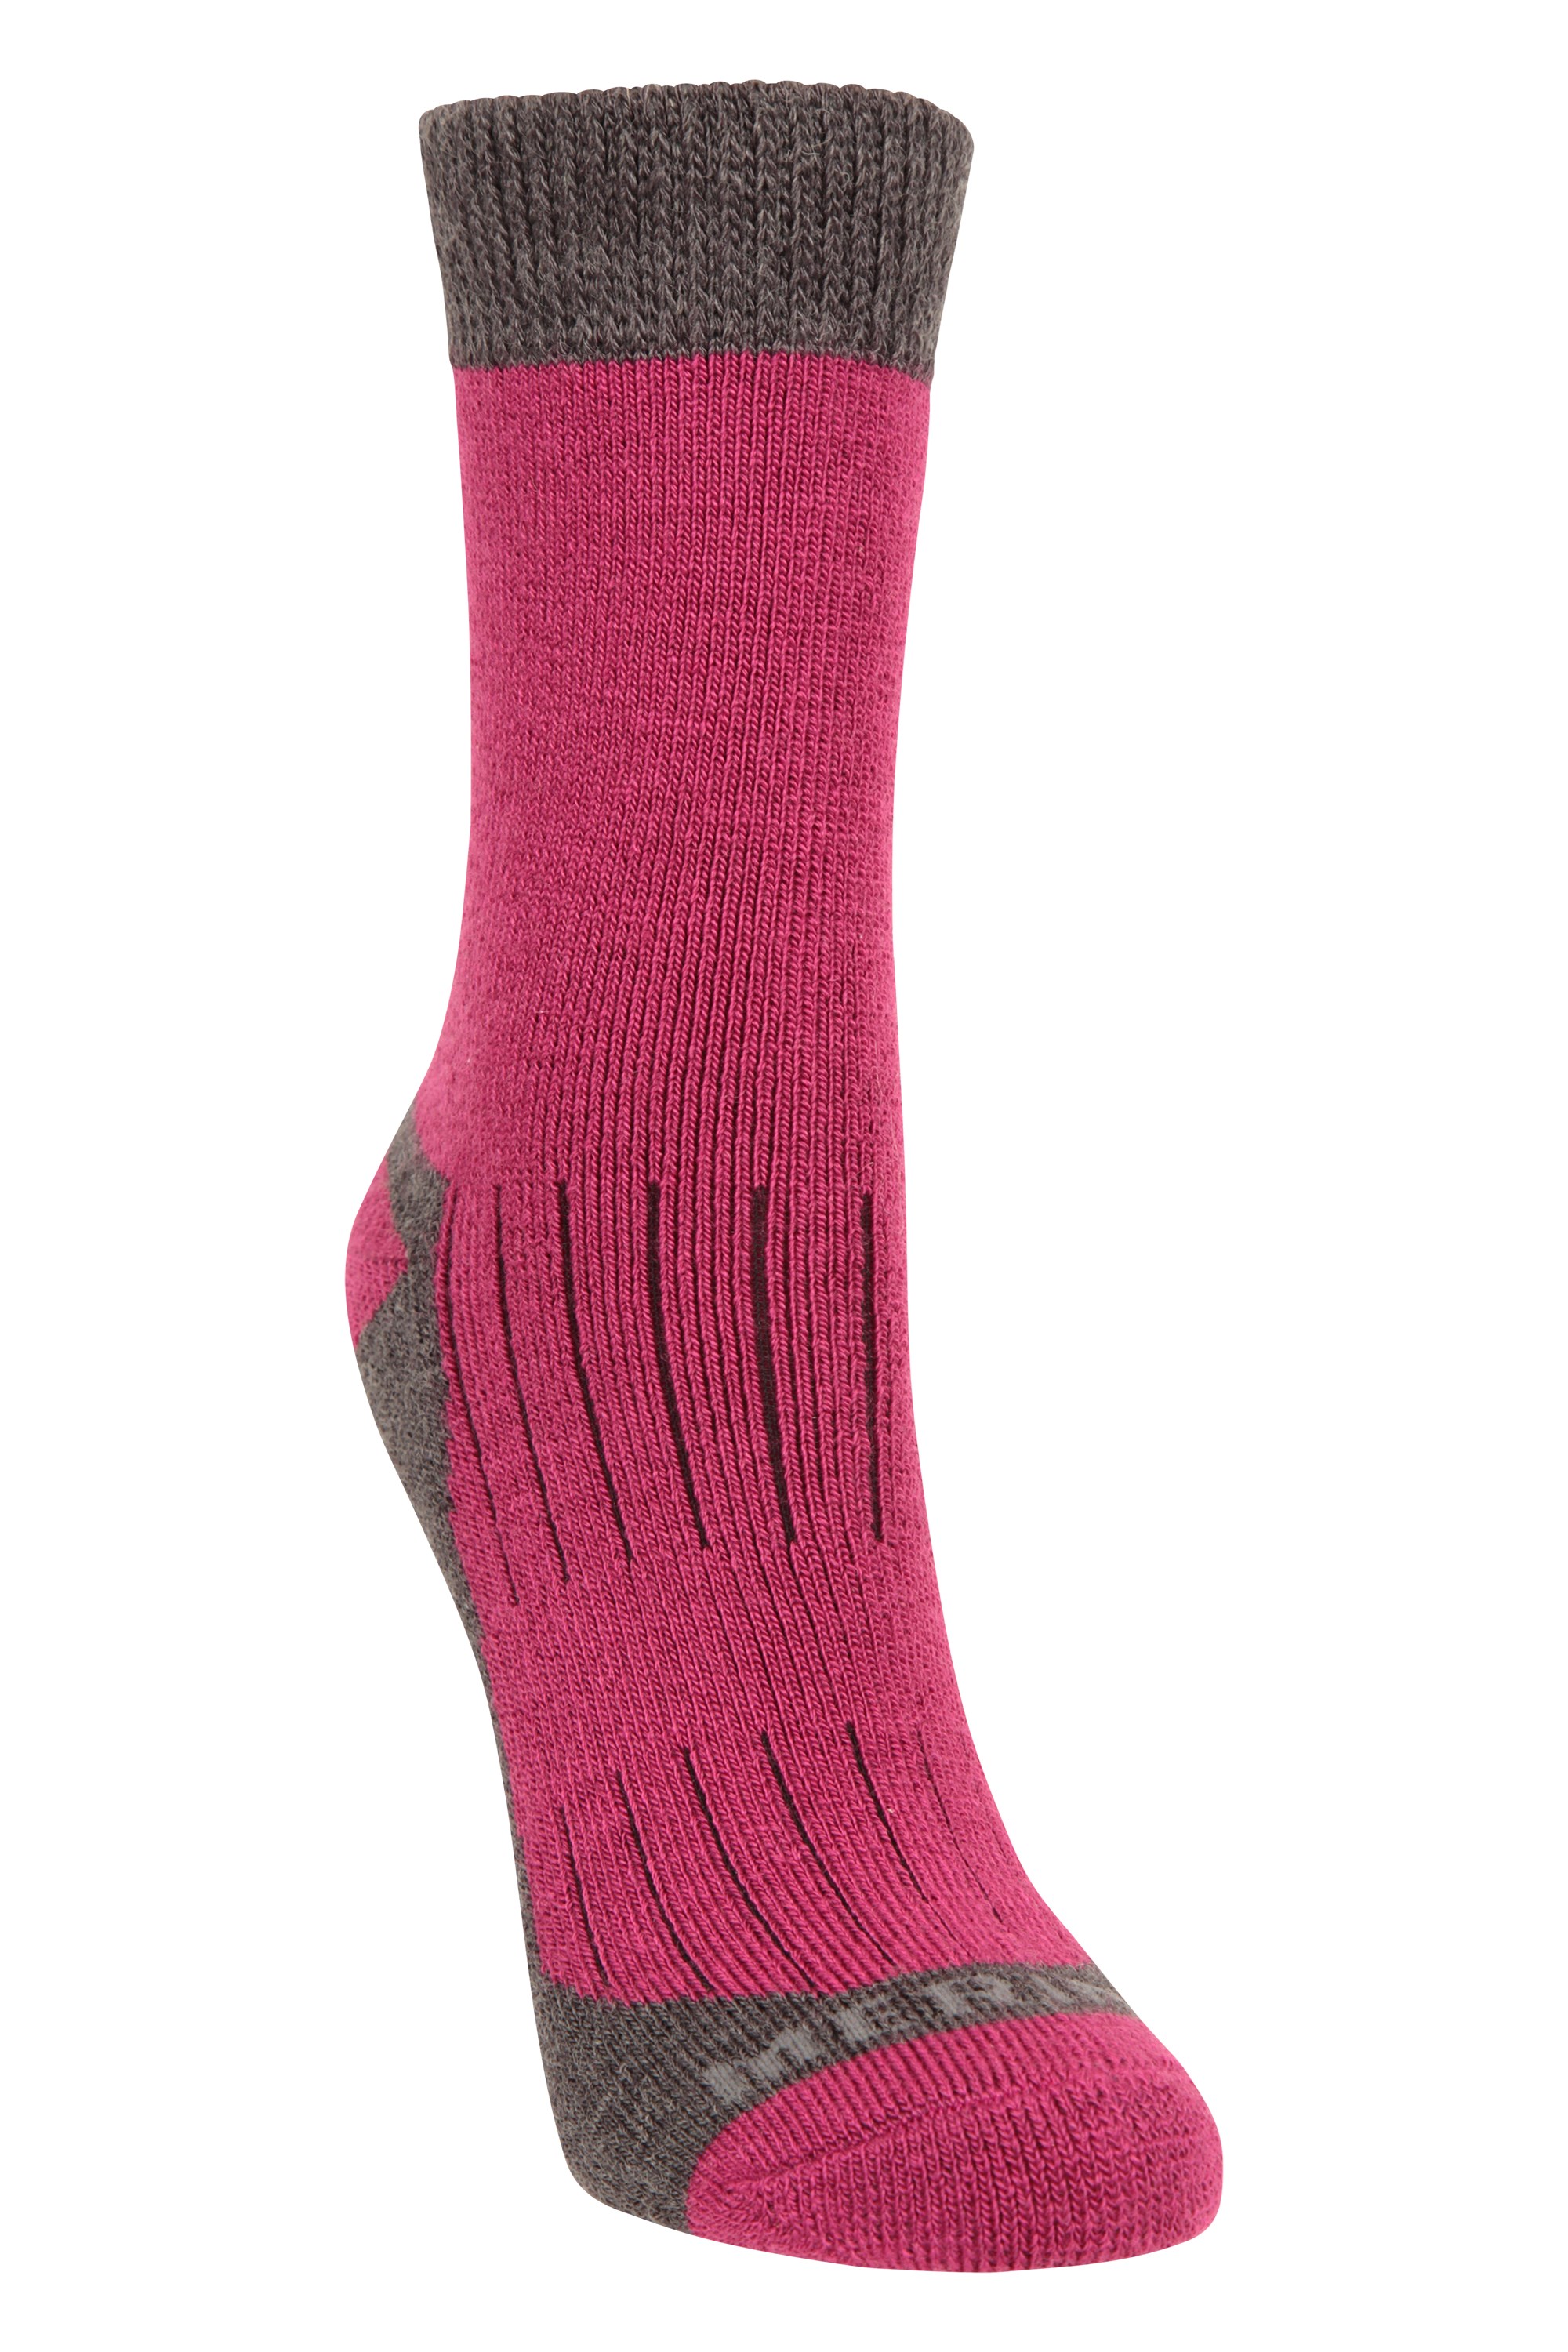 Explorer Kids Merino Thermal Socks - Pink